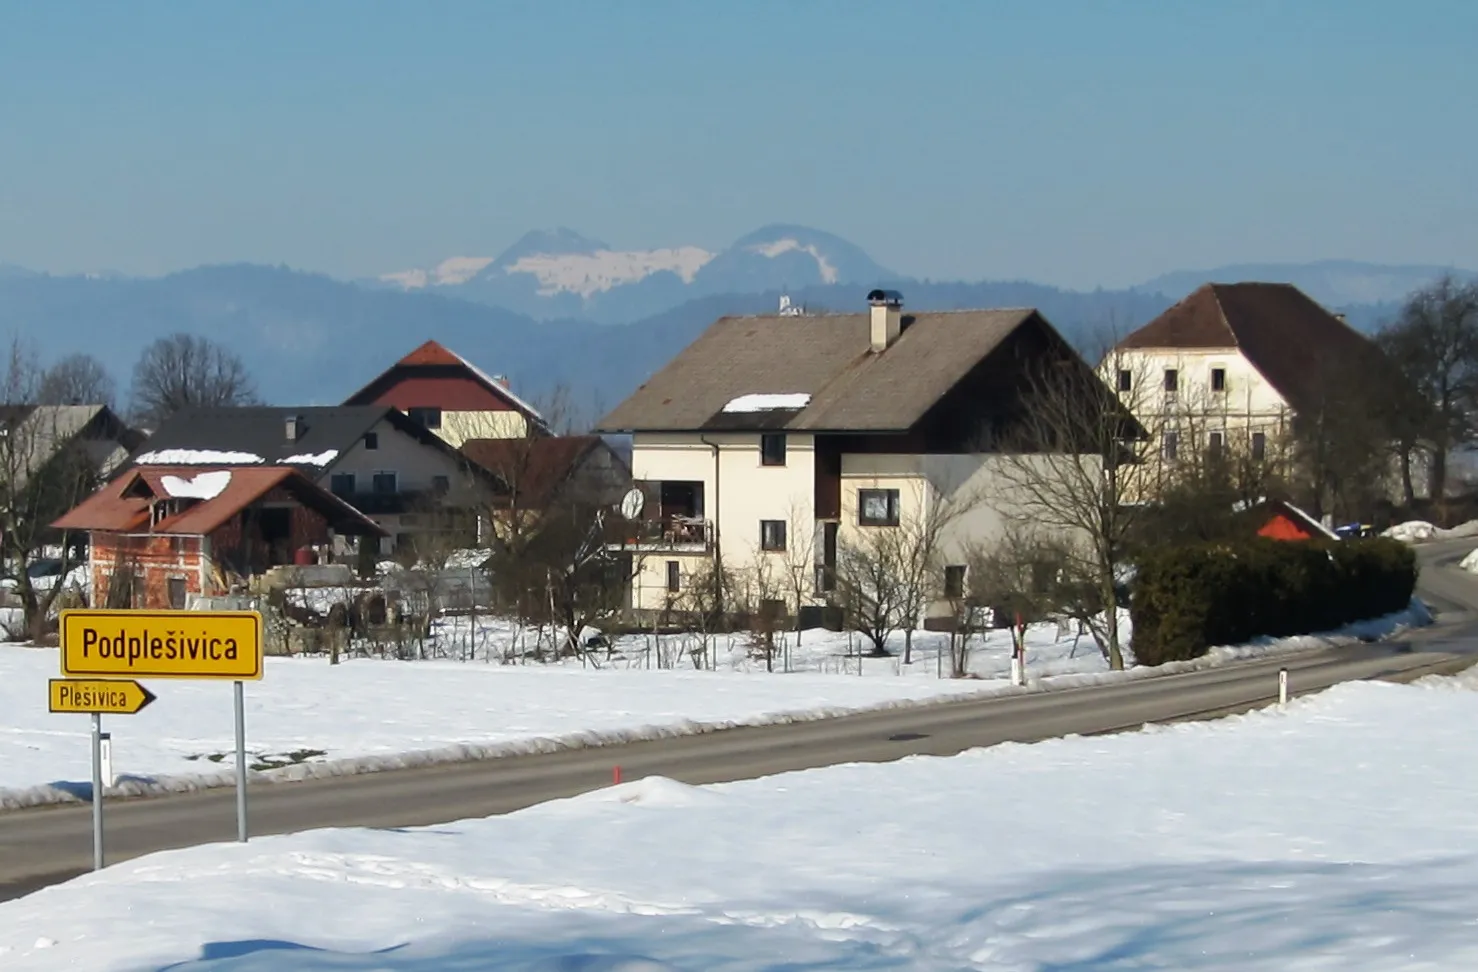 Photo showing: The settlement of Podplešivica, Municipality of Brezovica, Slovenia